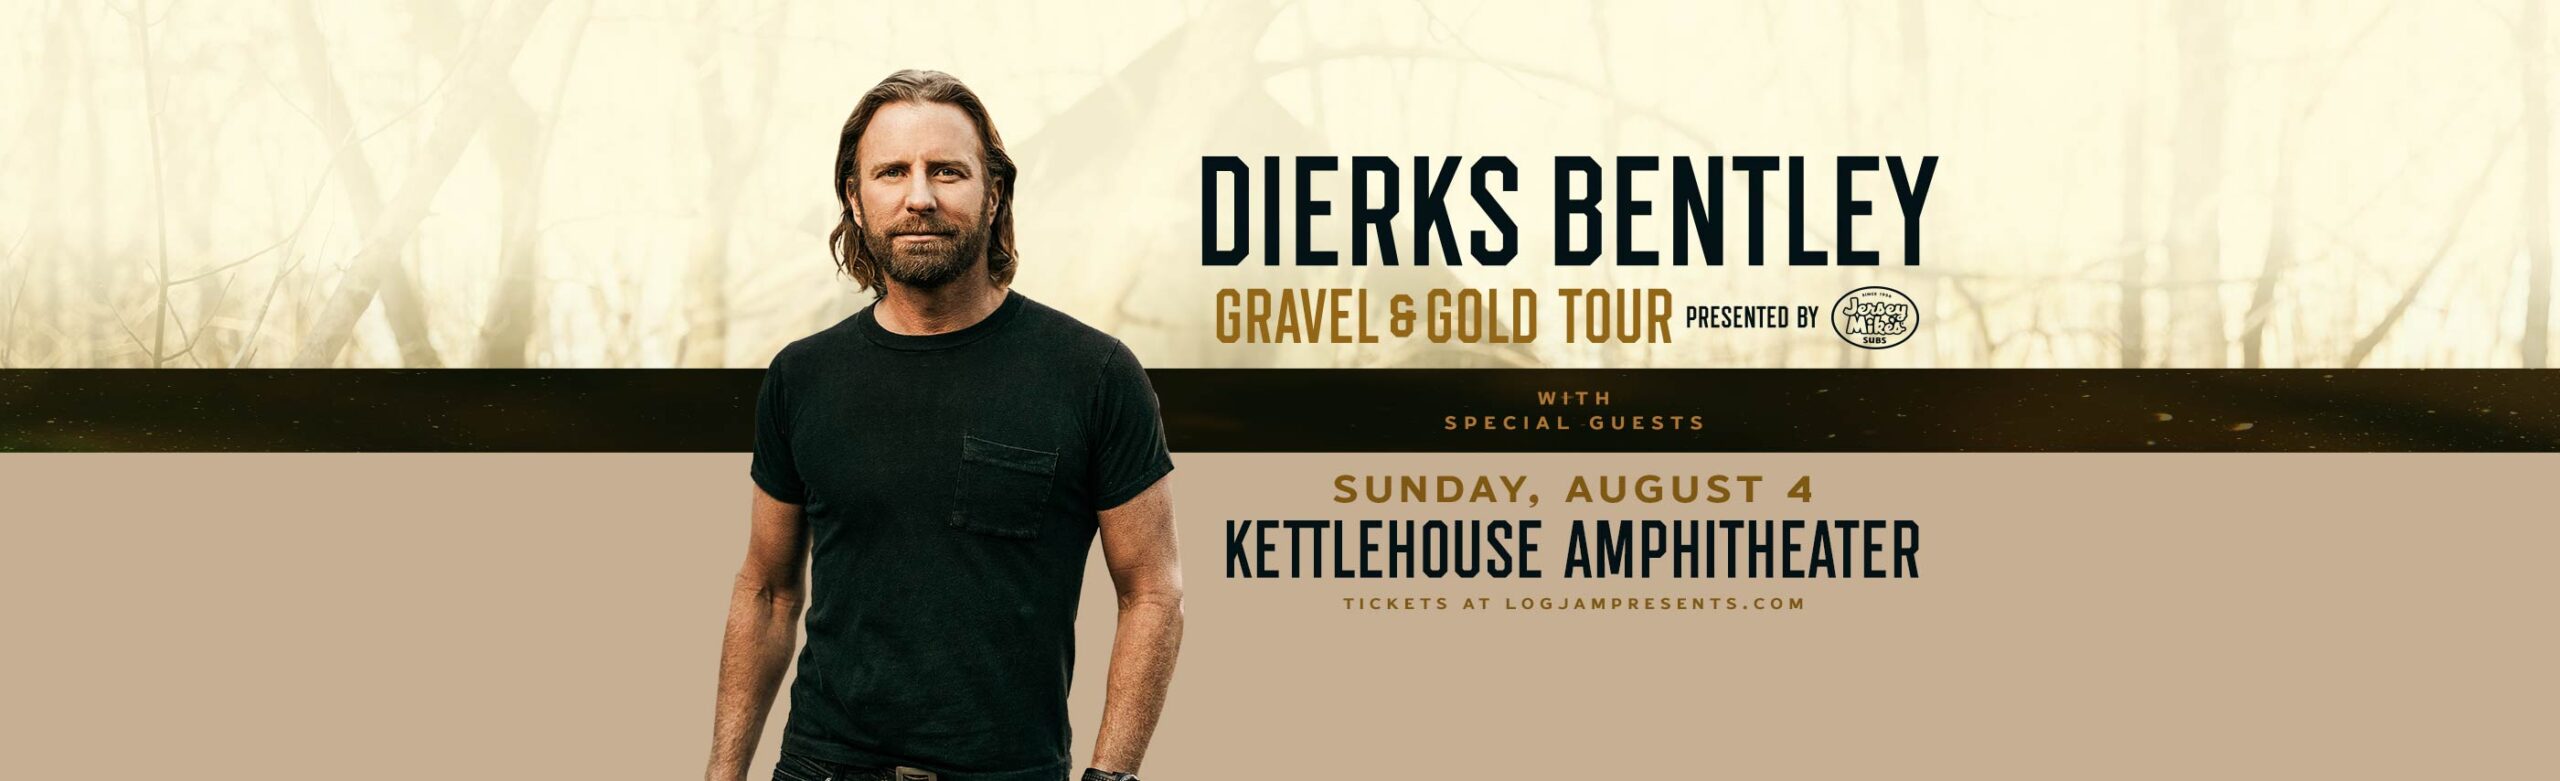 Dierks Bentley Announces Concert at KettleHouse Amphitheater Image